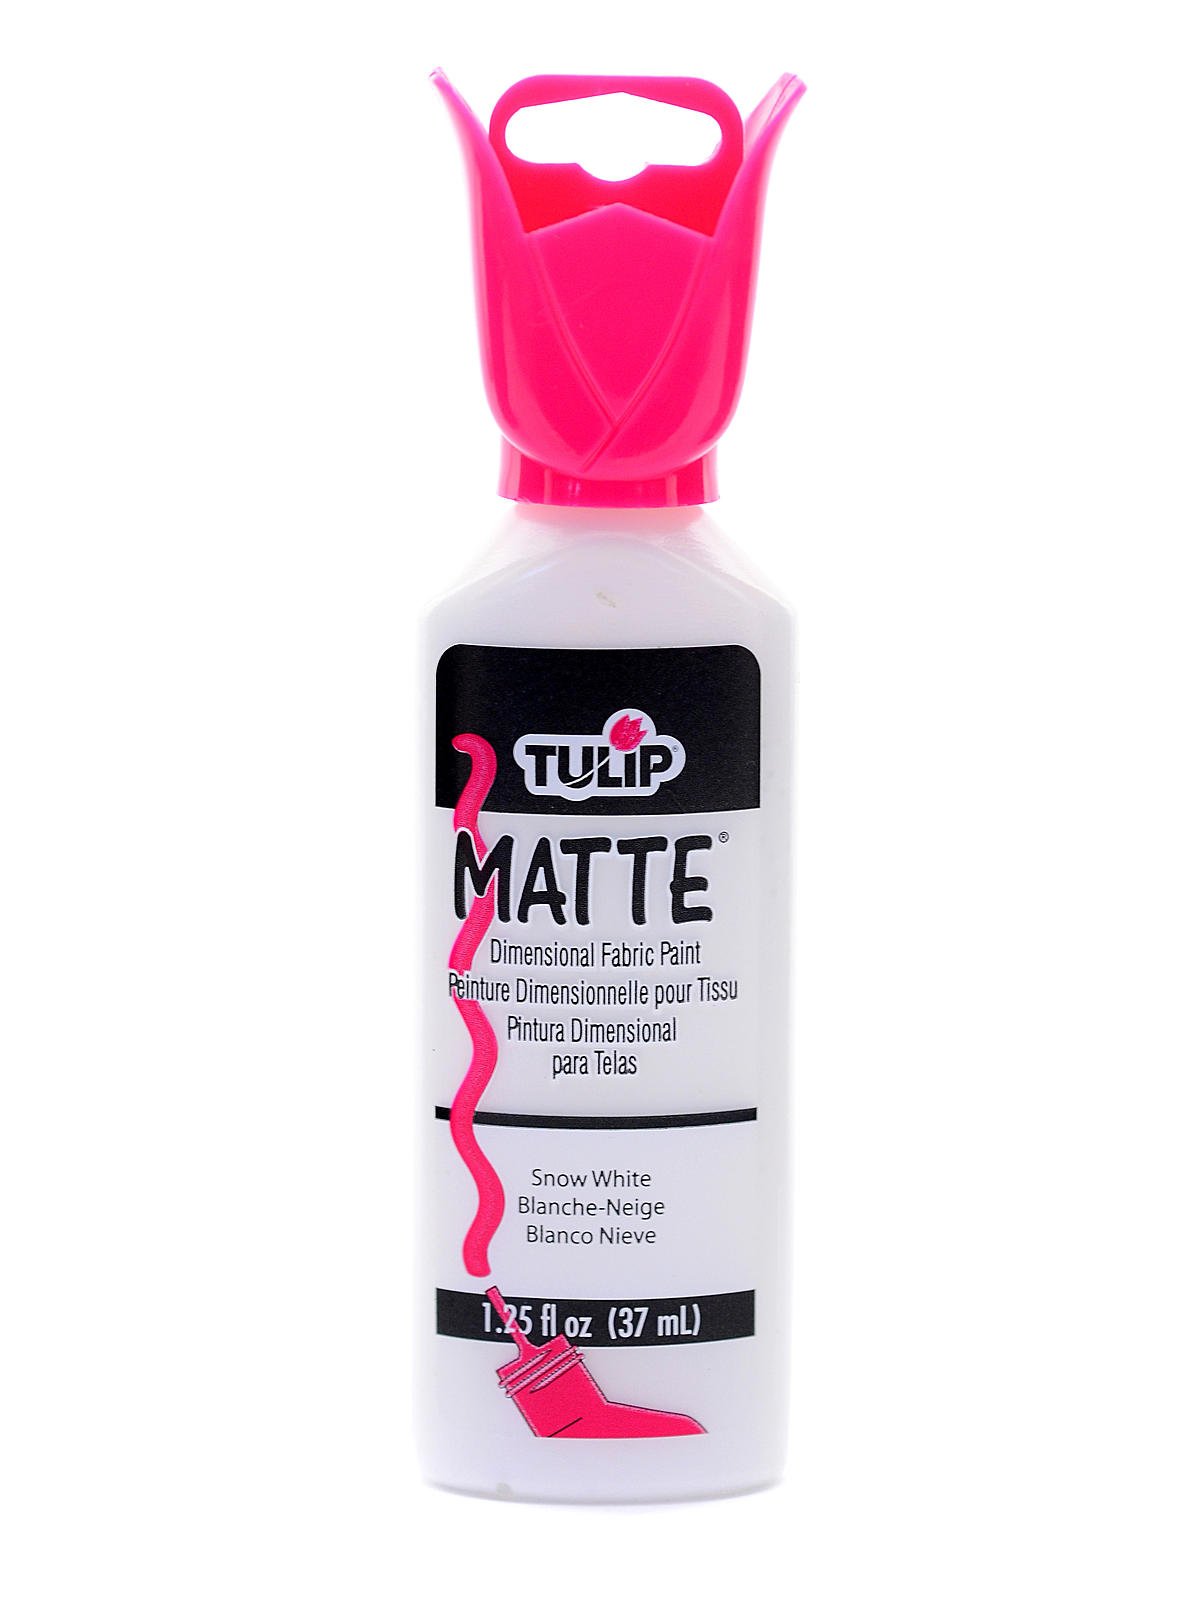 Tulip Matte Dimensional Fabric Paint